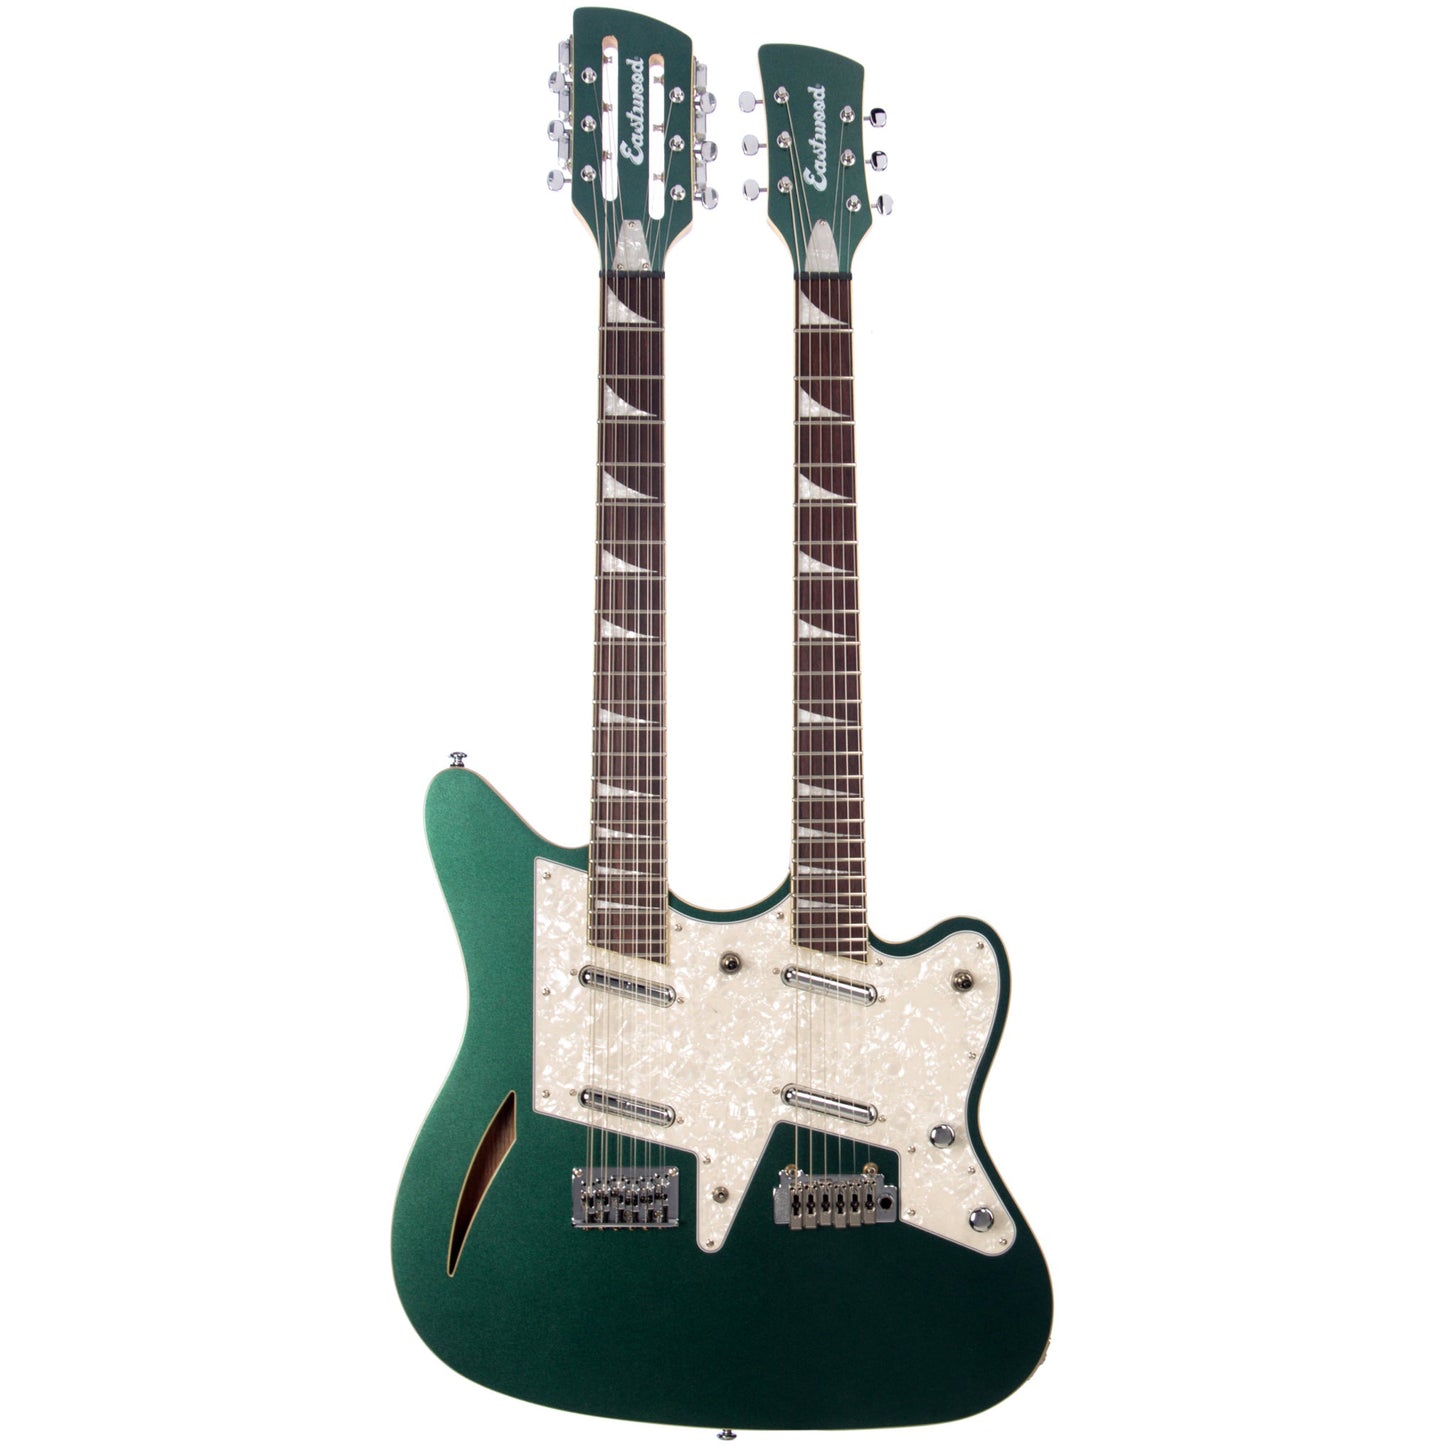 Eastwood Guitars Surfcaster 12/6 Double Neck Electric Guitar - Metallic Green